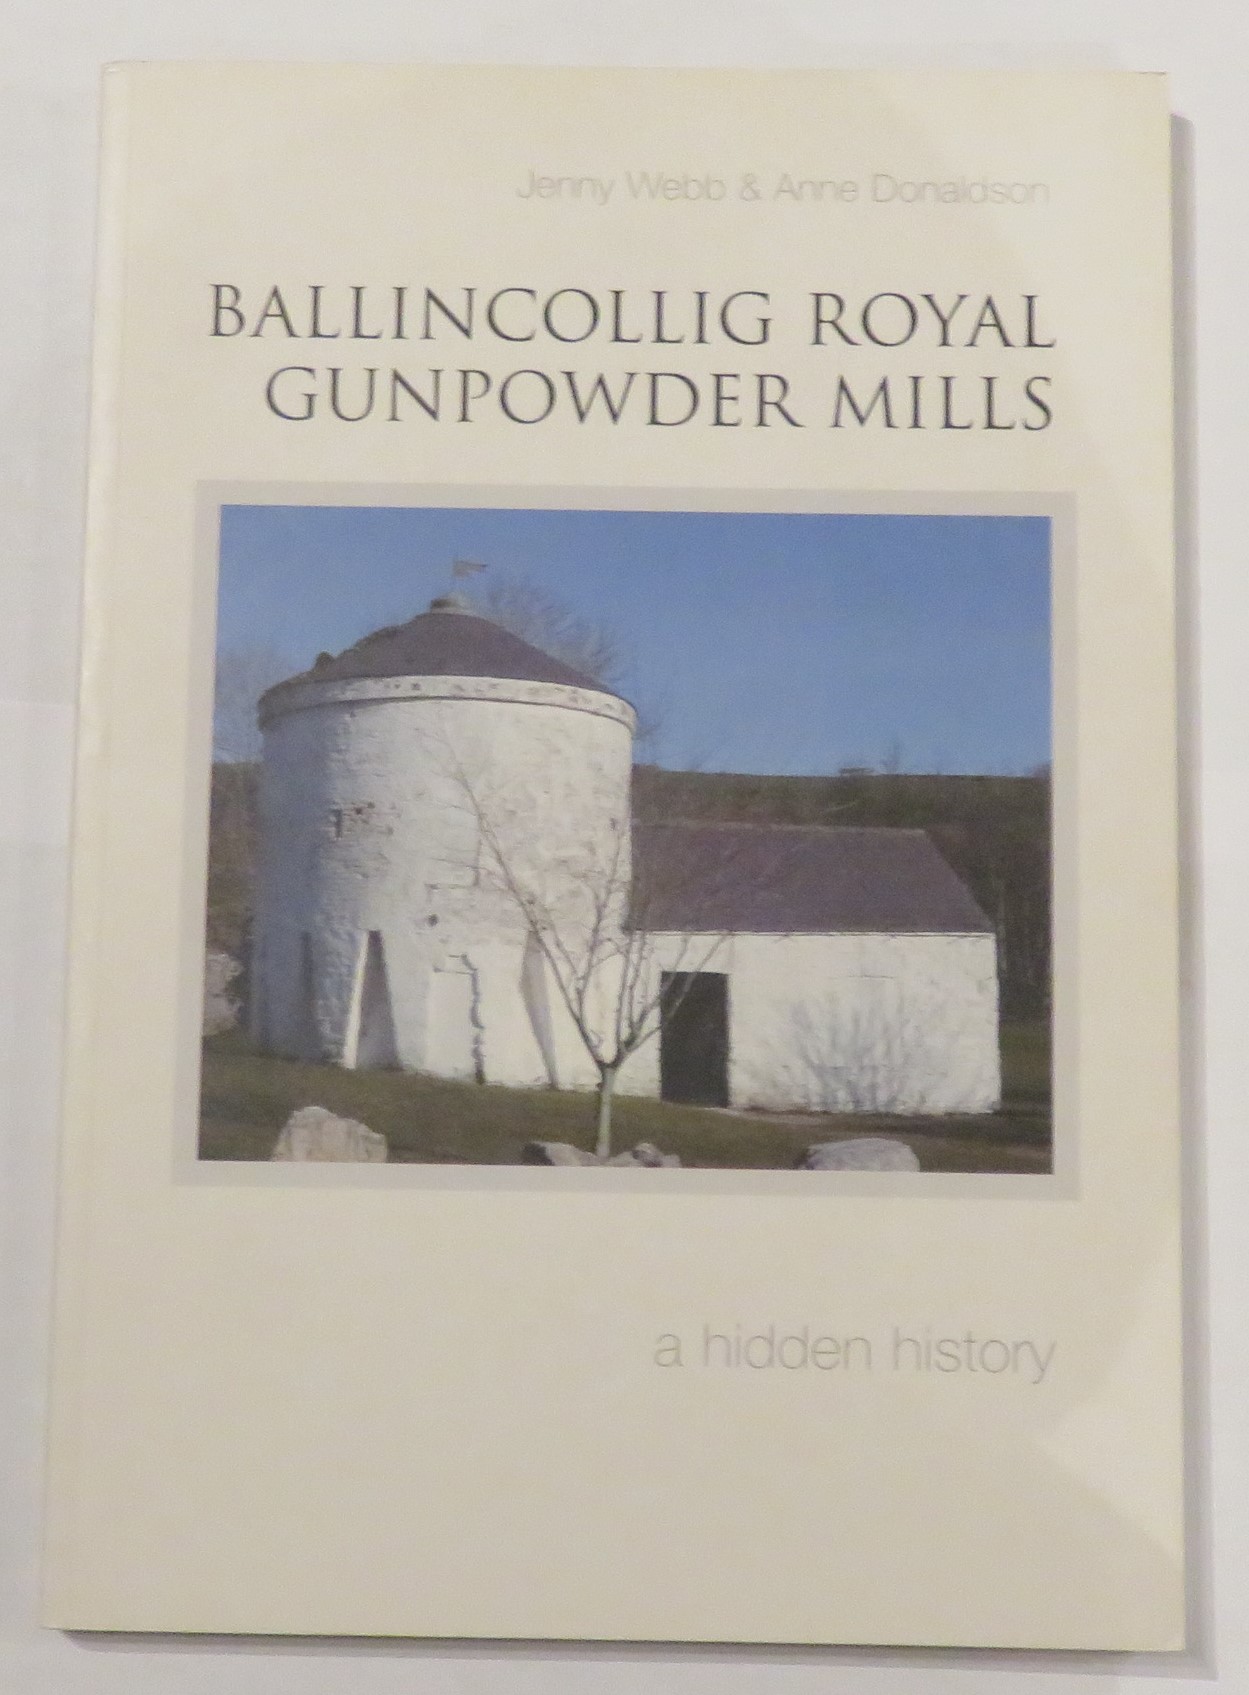 Ballincollig Royal Gunpowder Mills: A Hidden History